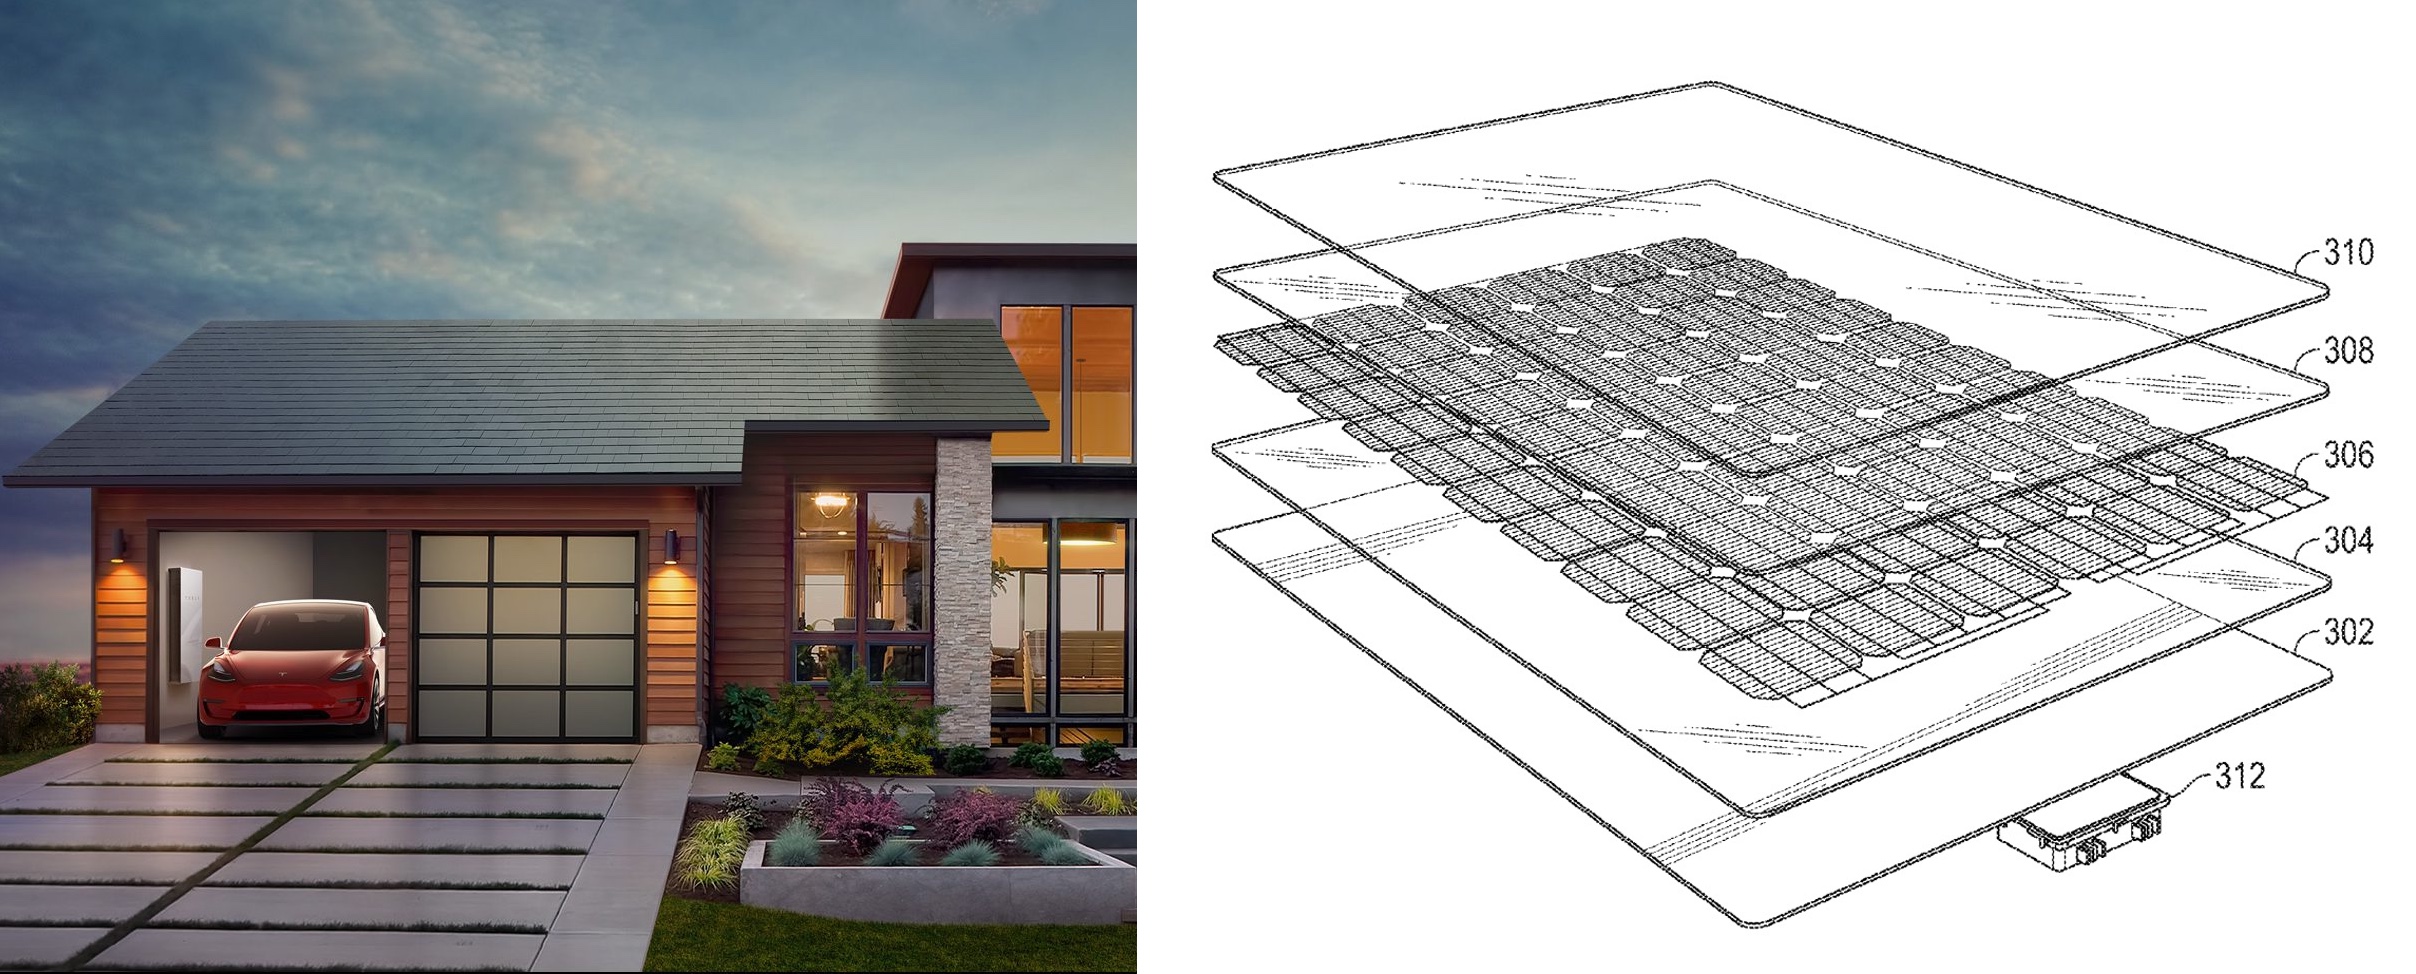 tesla slate solar roof tiles